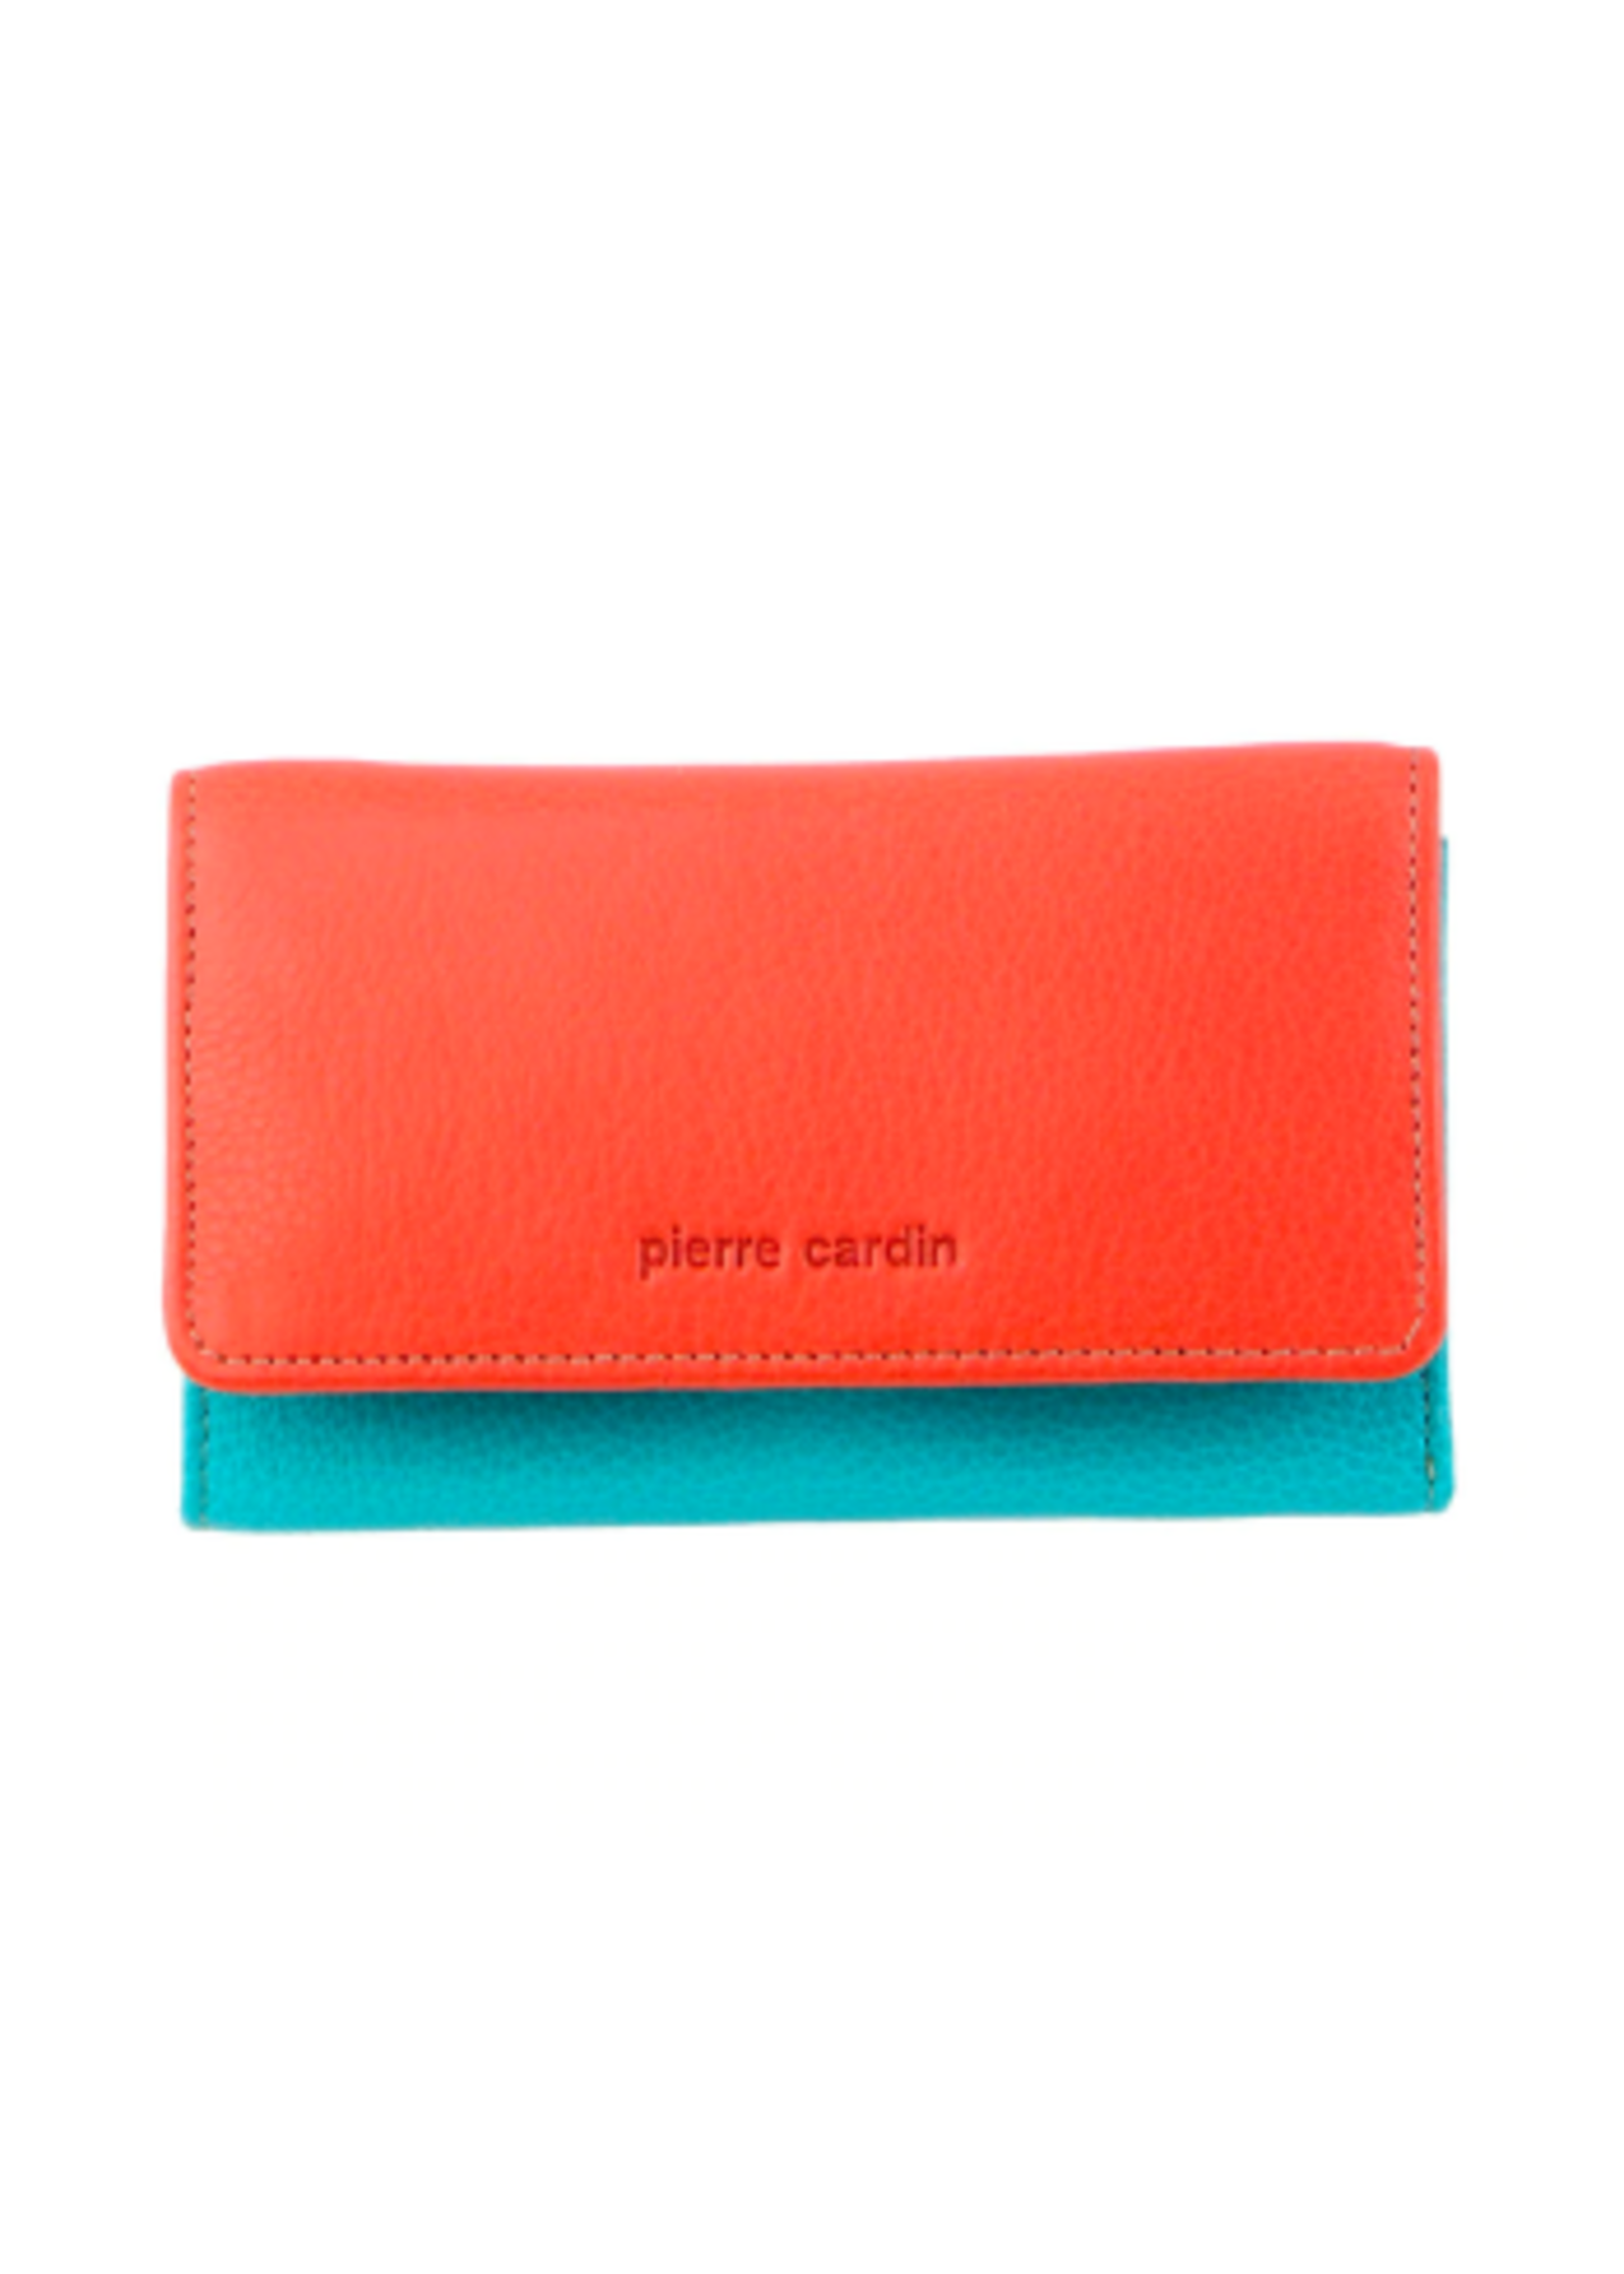 Pierre Cardin Ladies Wallet - Orange/Turquoise (PC3261)